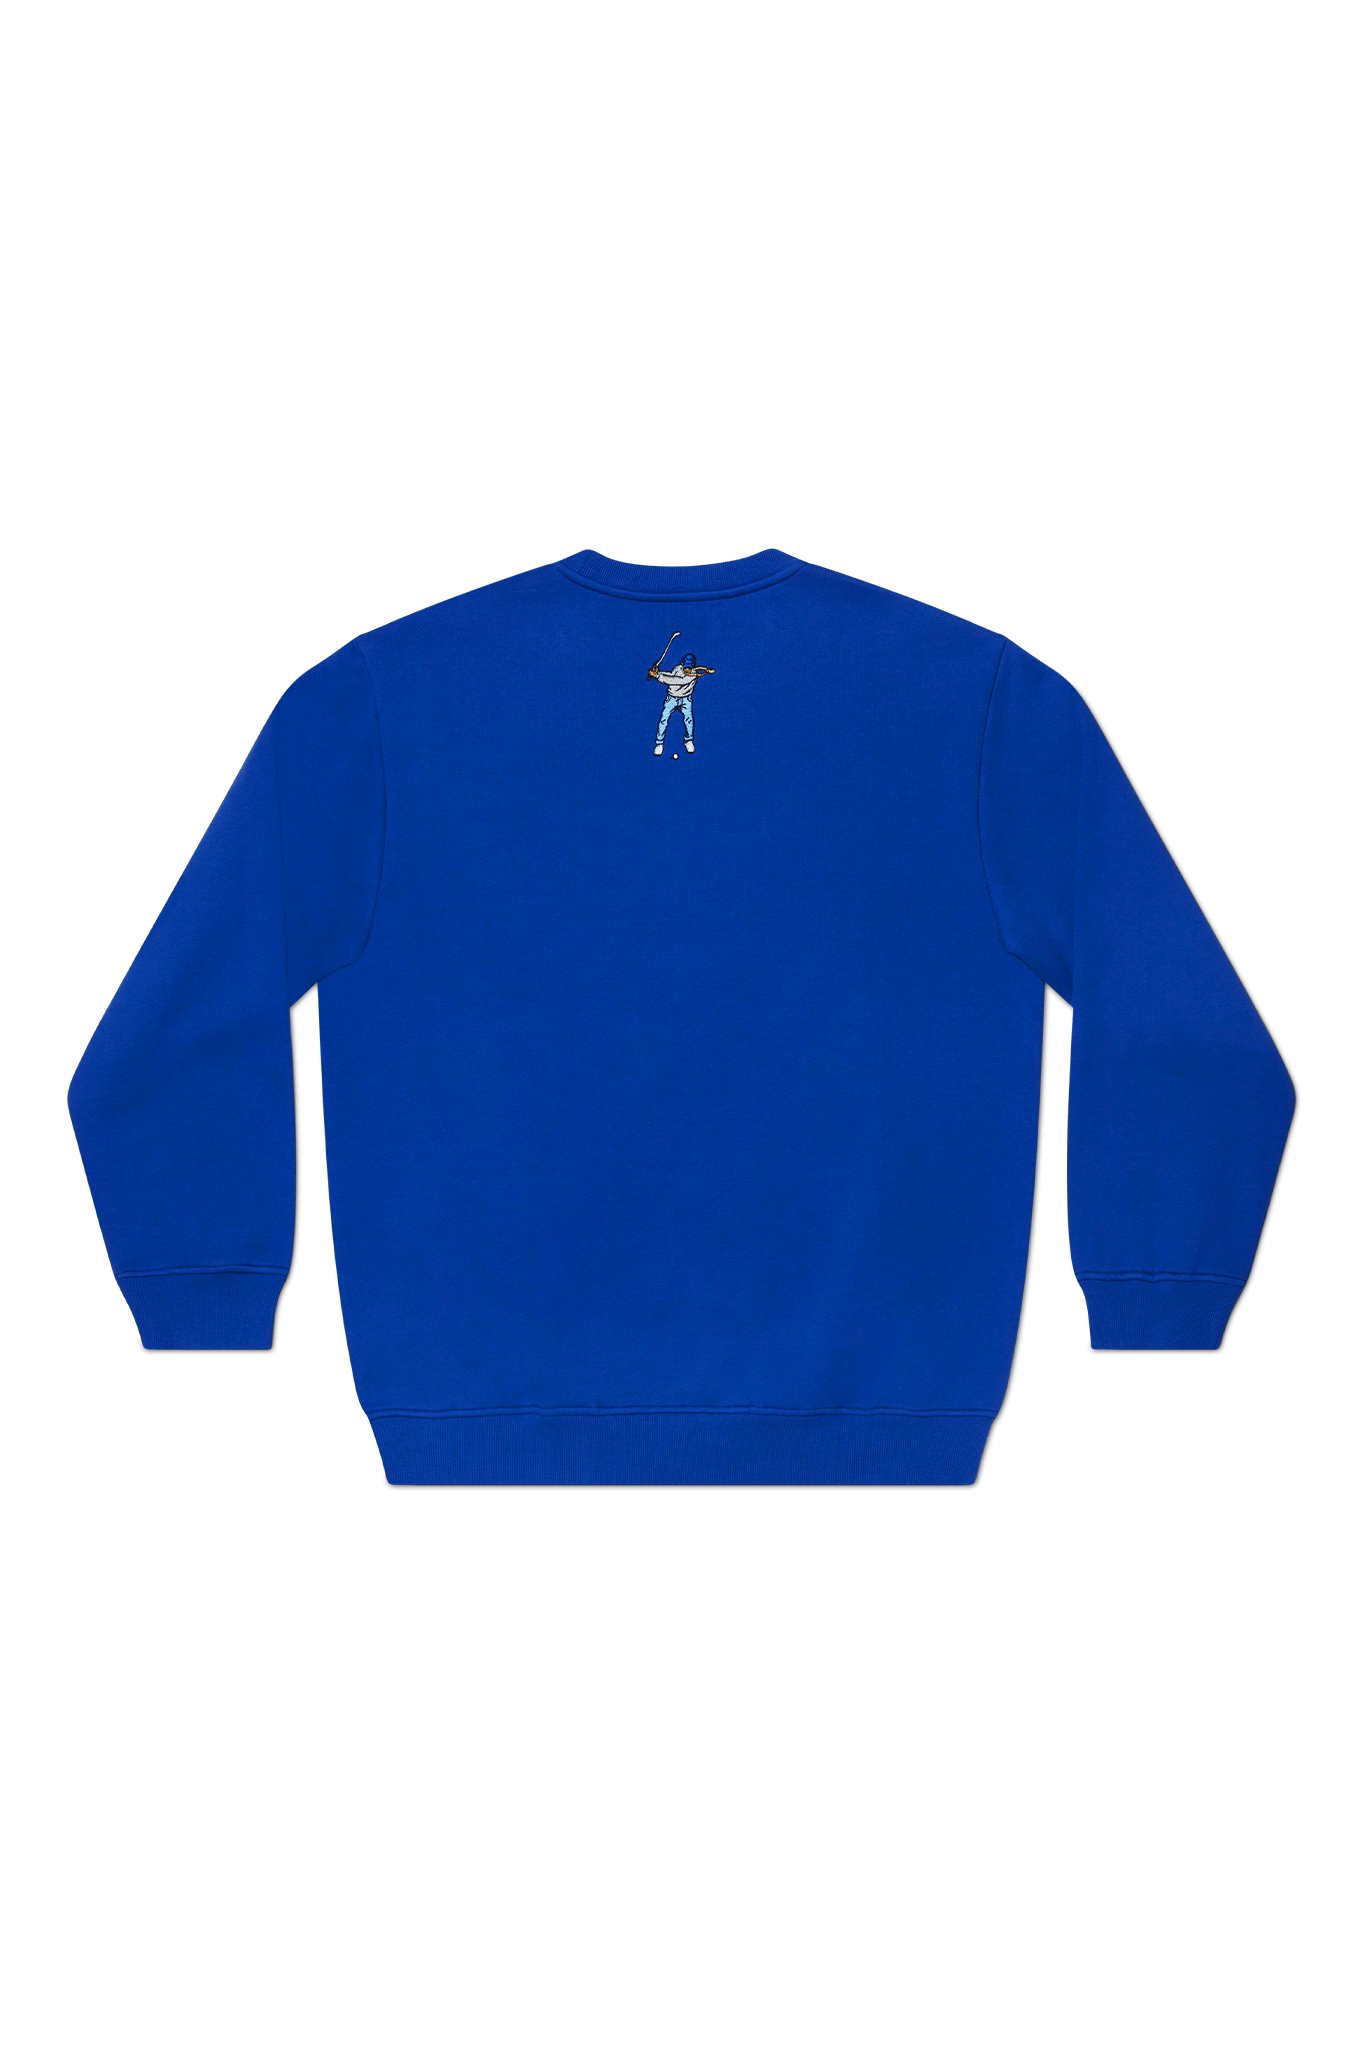 Blue PGAT All Star Sweatshirt